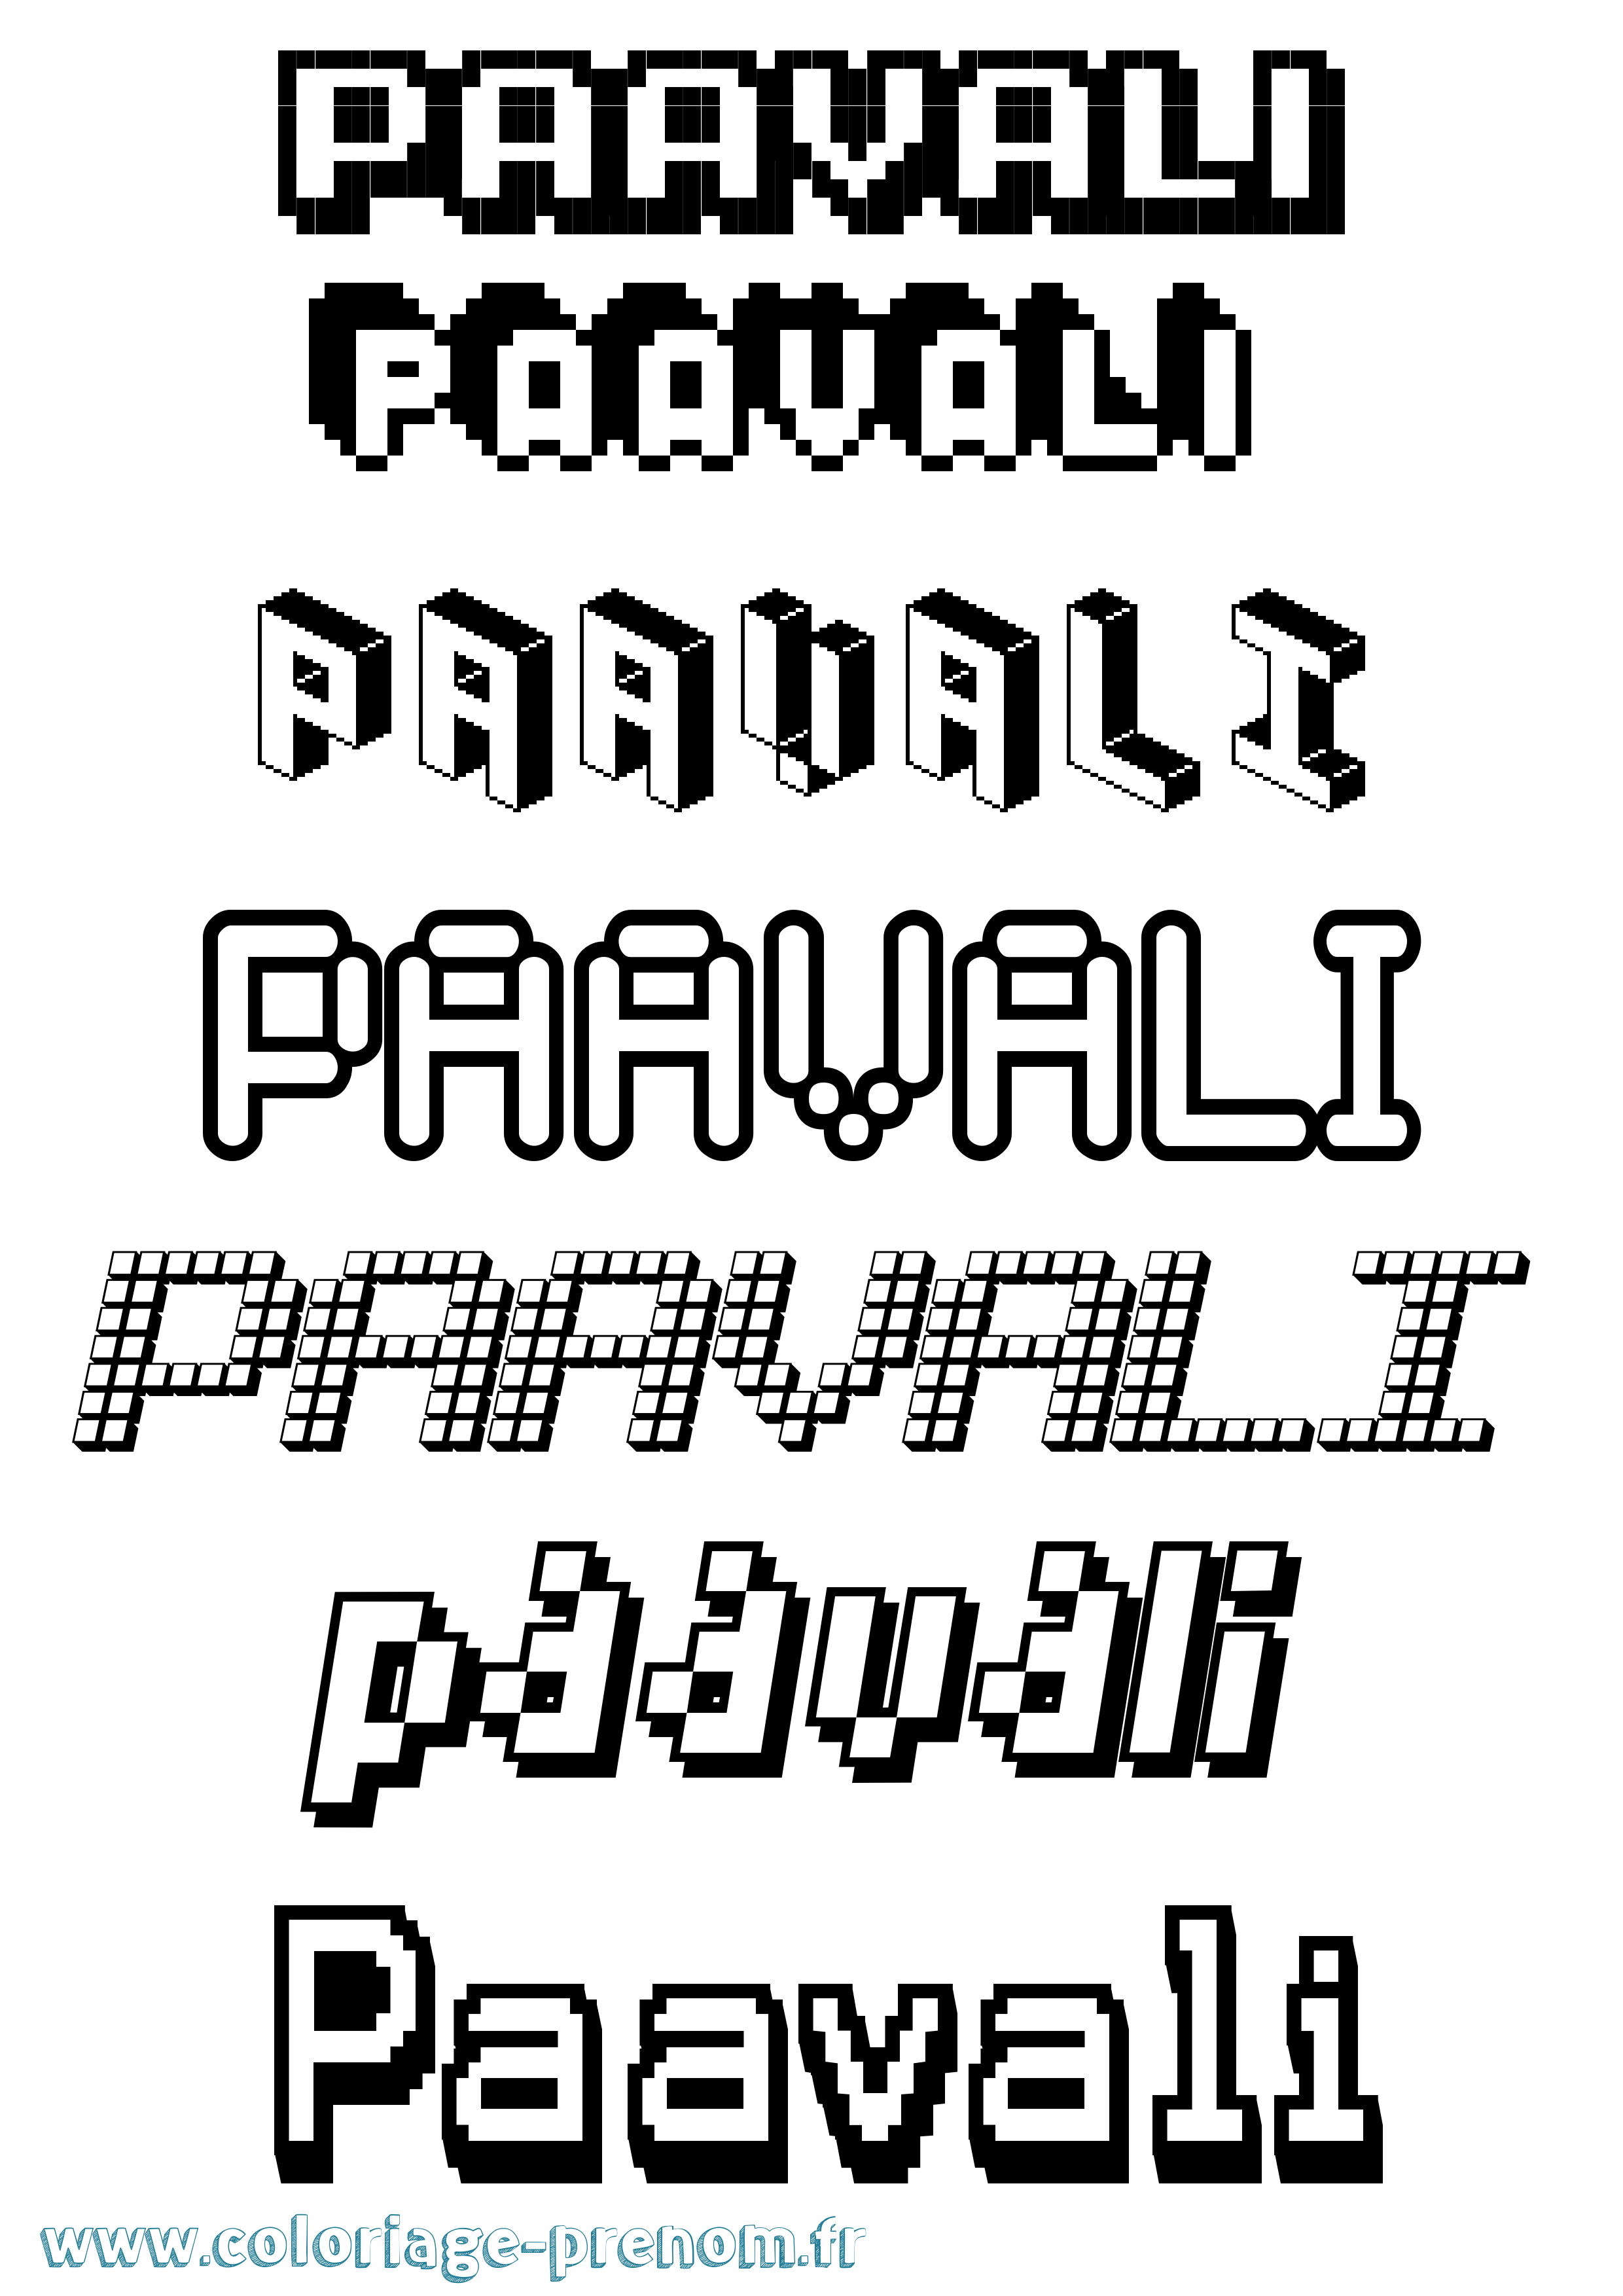 Coloriage prénom Paavali Pixel